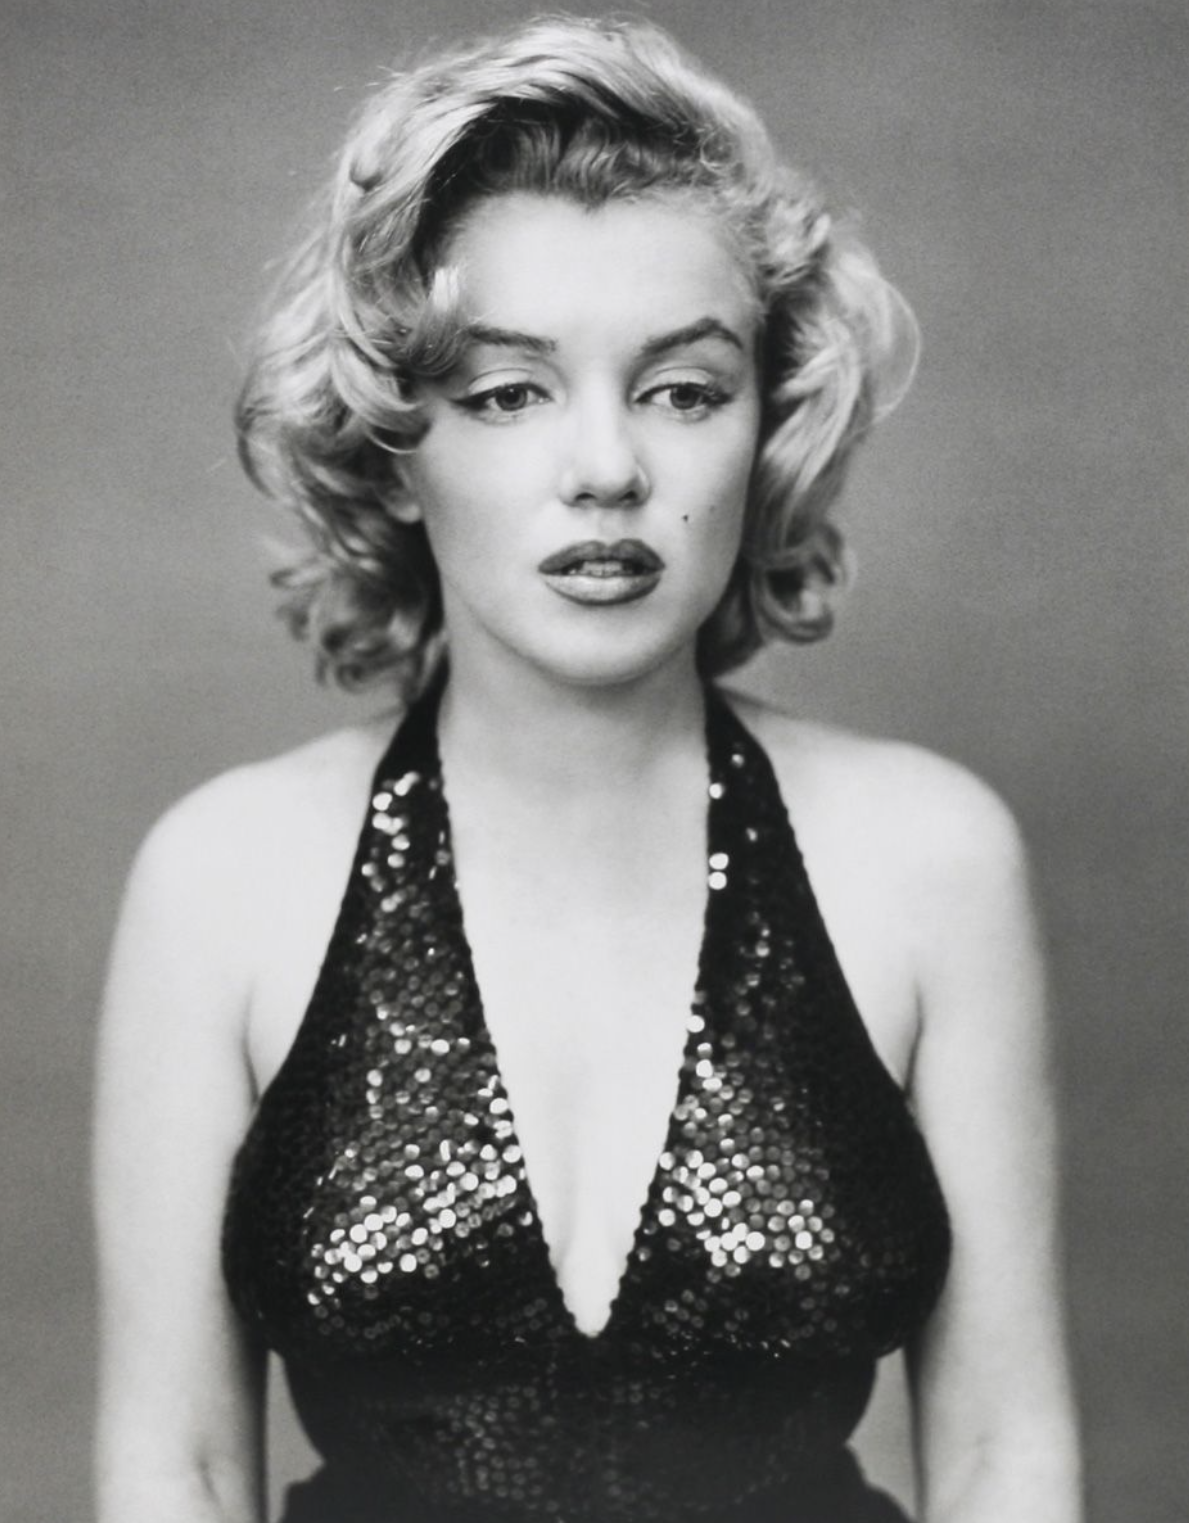 Actress Marilyn Monroe looking downcast